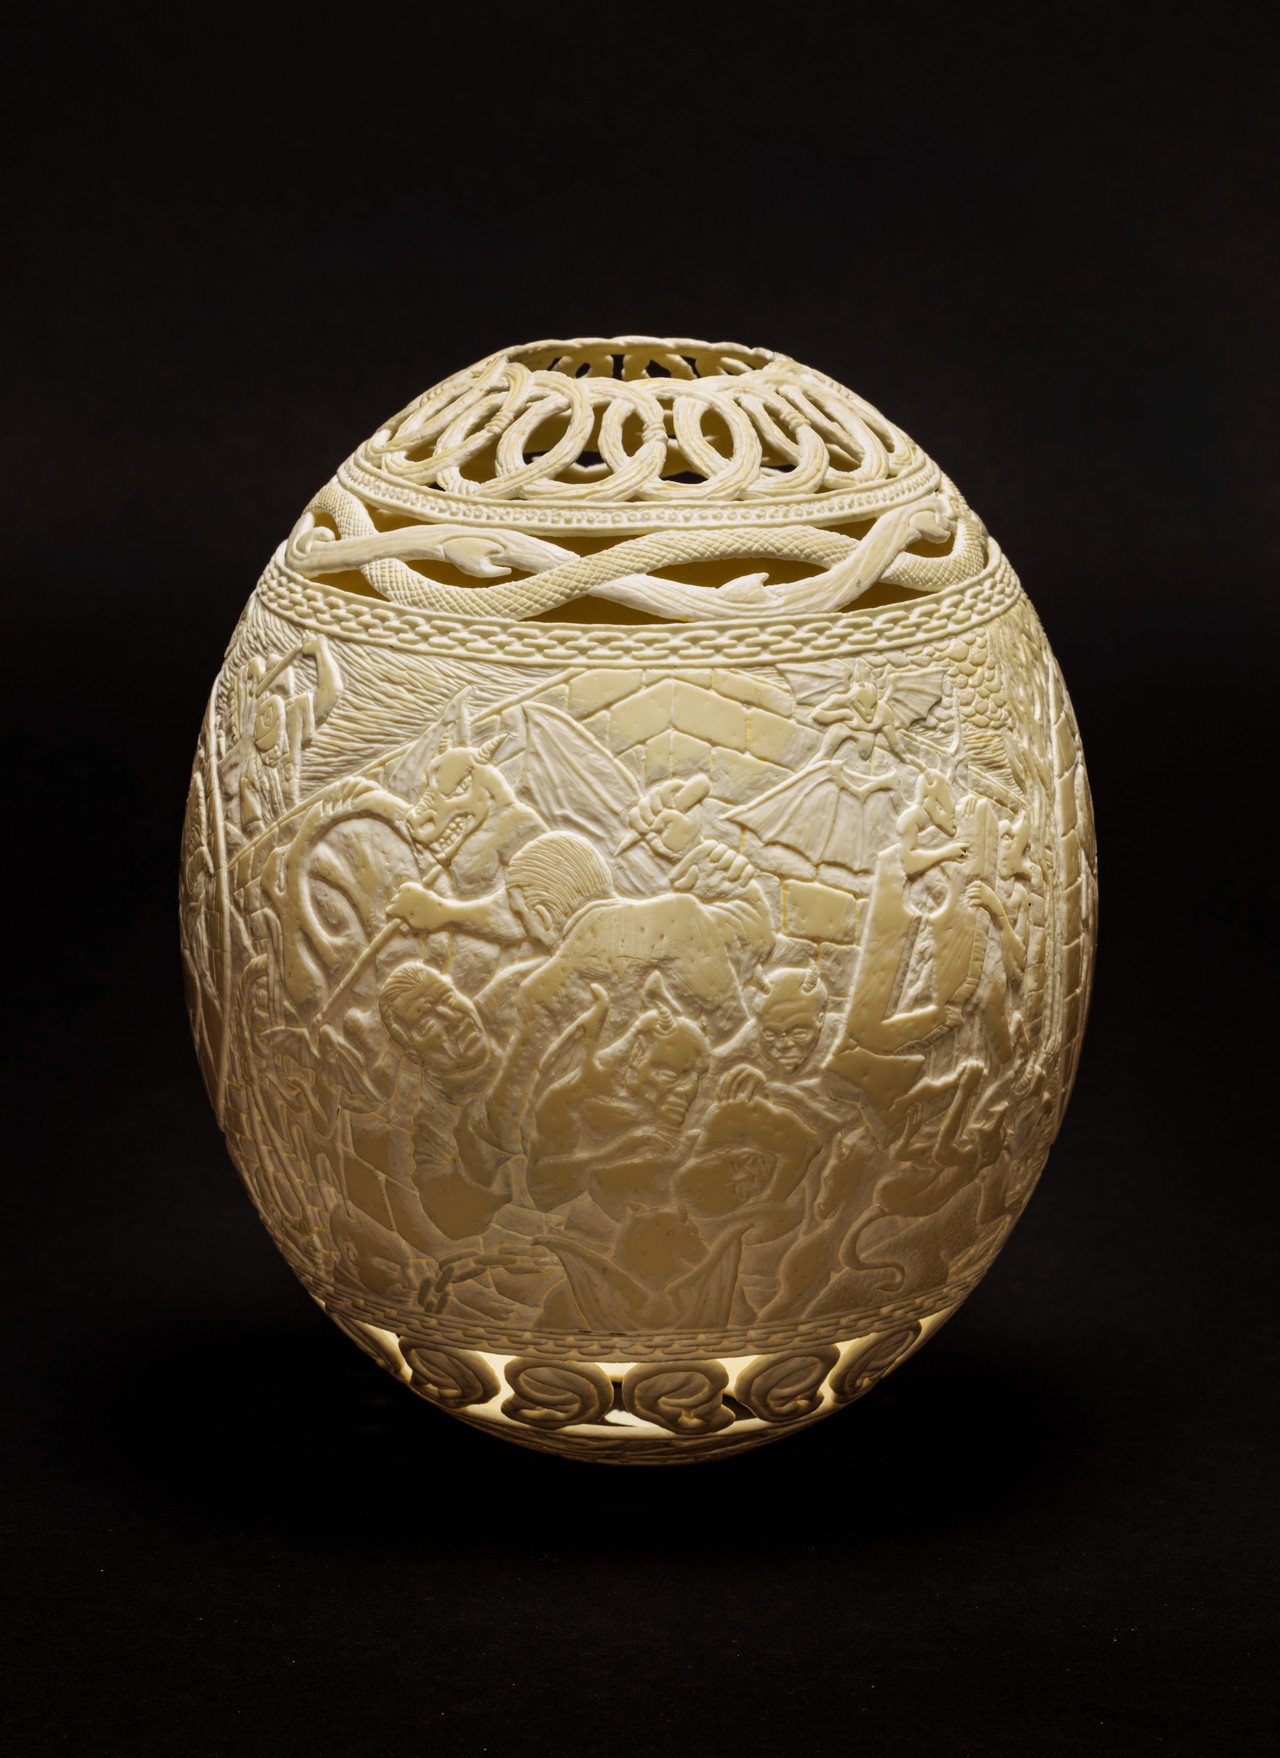 Gil Batle, Voices, 2017, Carved Ostrich Egg, 16.5 x 12.7 x 12.7 cm, GB 007